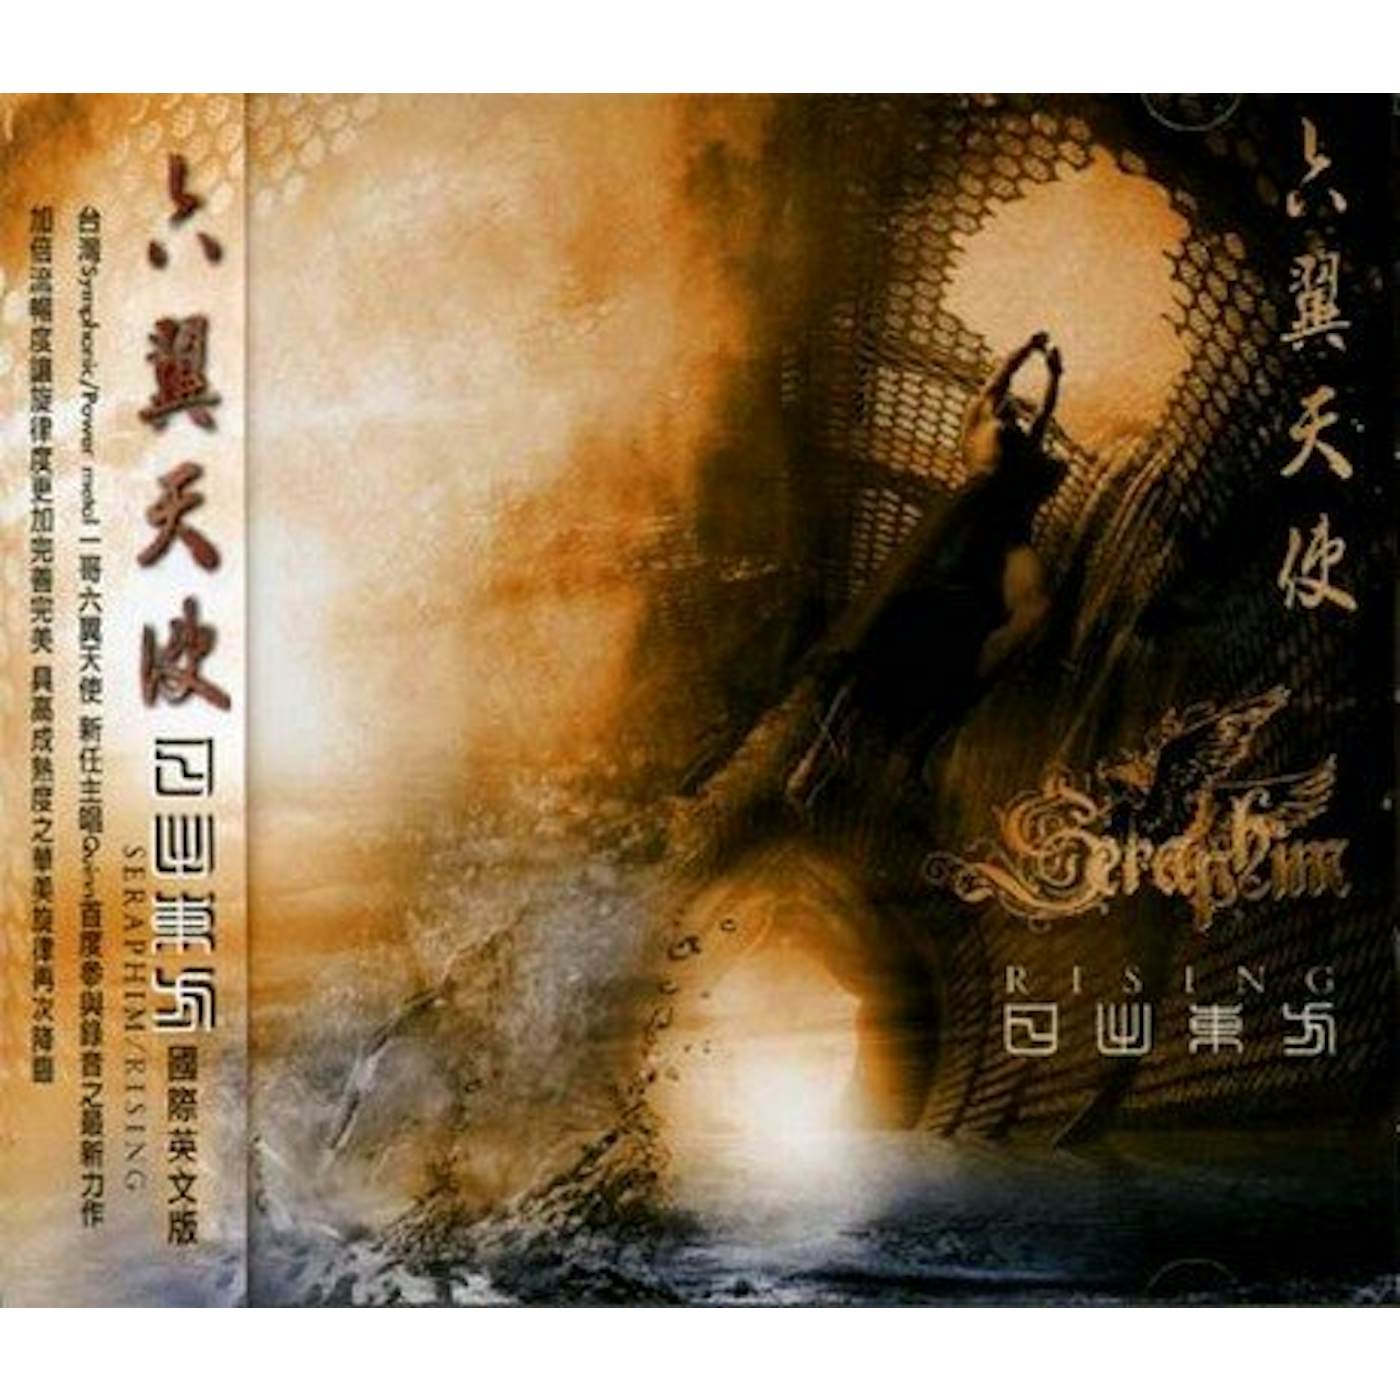  Seraphim (六翼天使) RISING CD